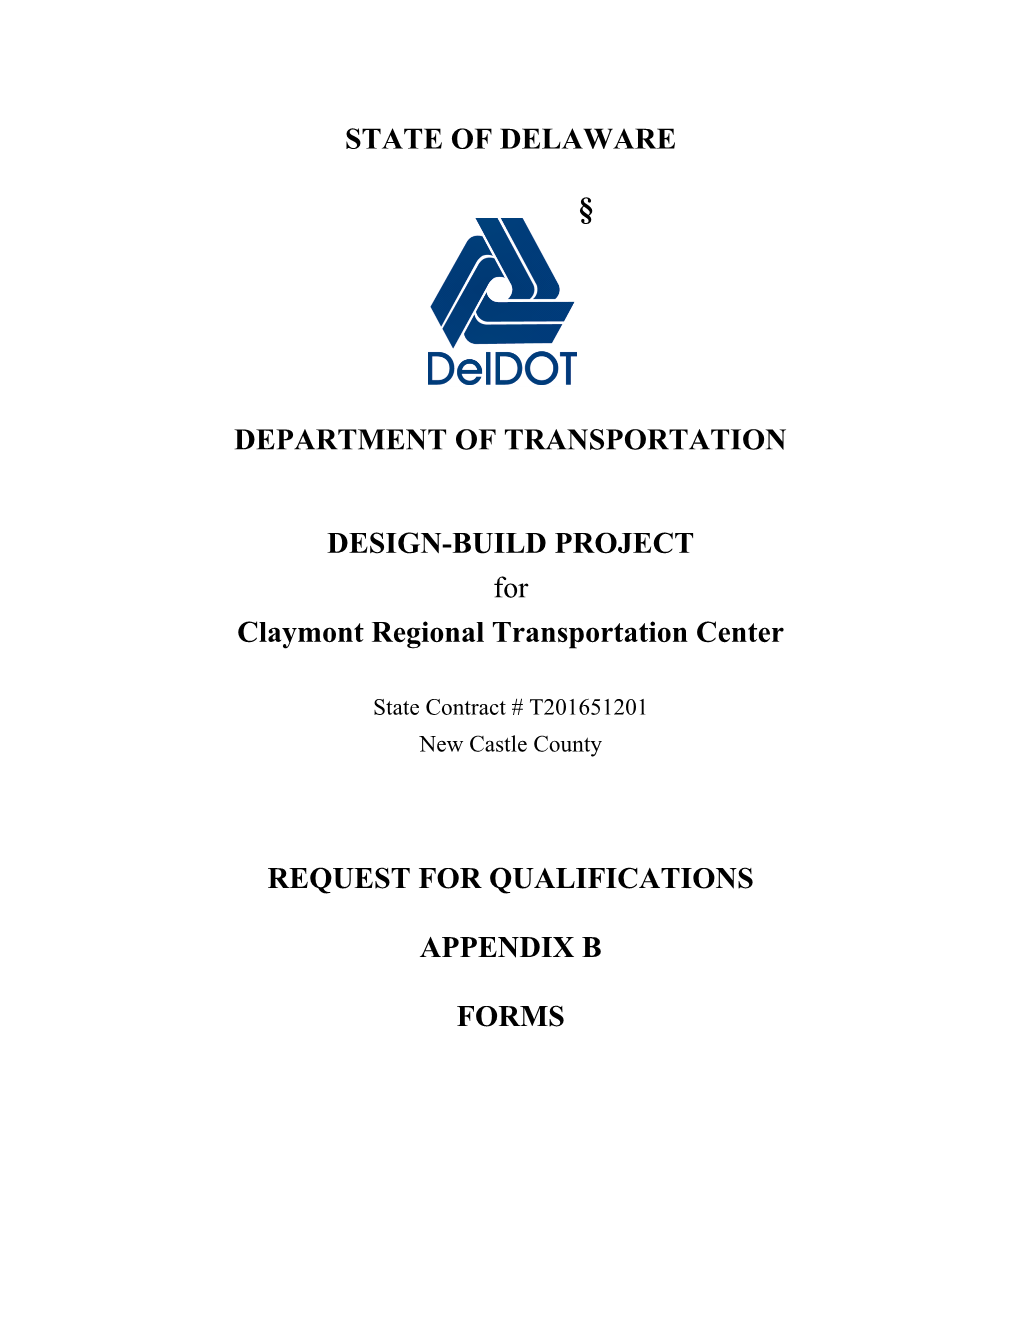 Claymont Regional Transportation Center